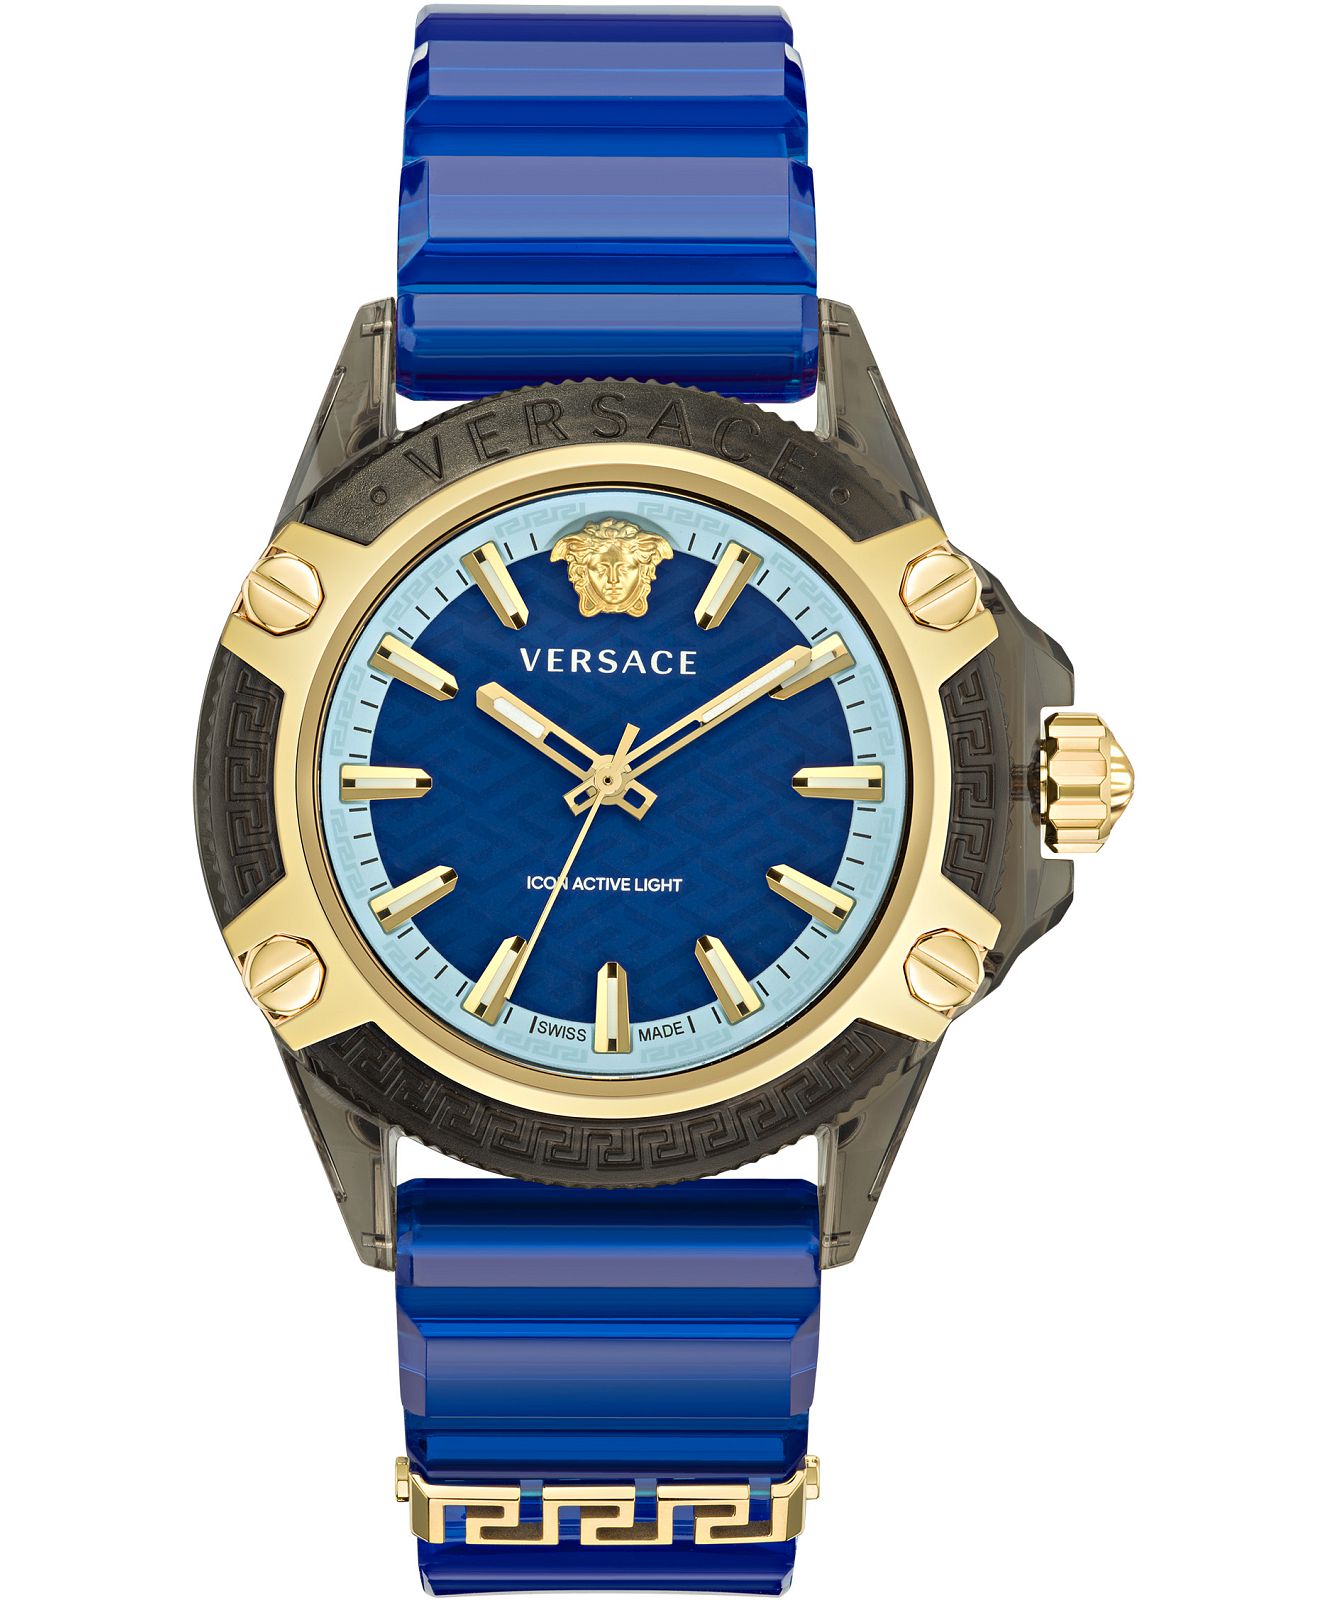 Versace VE6E00323 - Icon Active Watch • Watchard.com